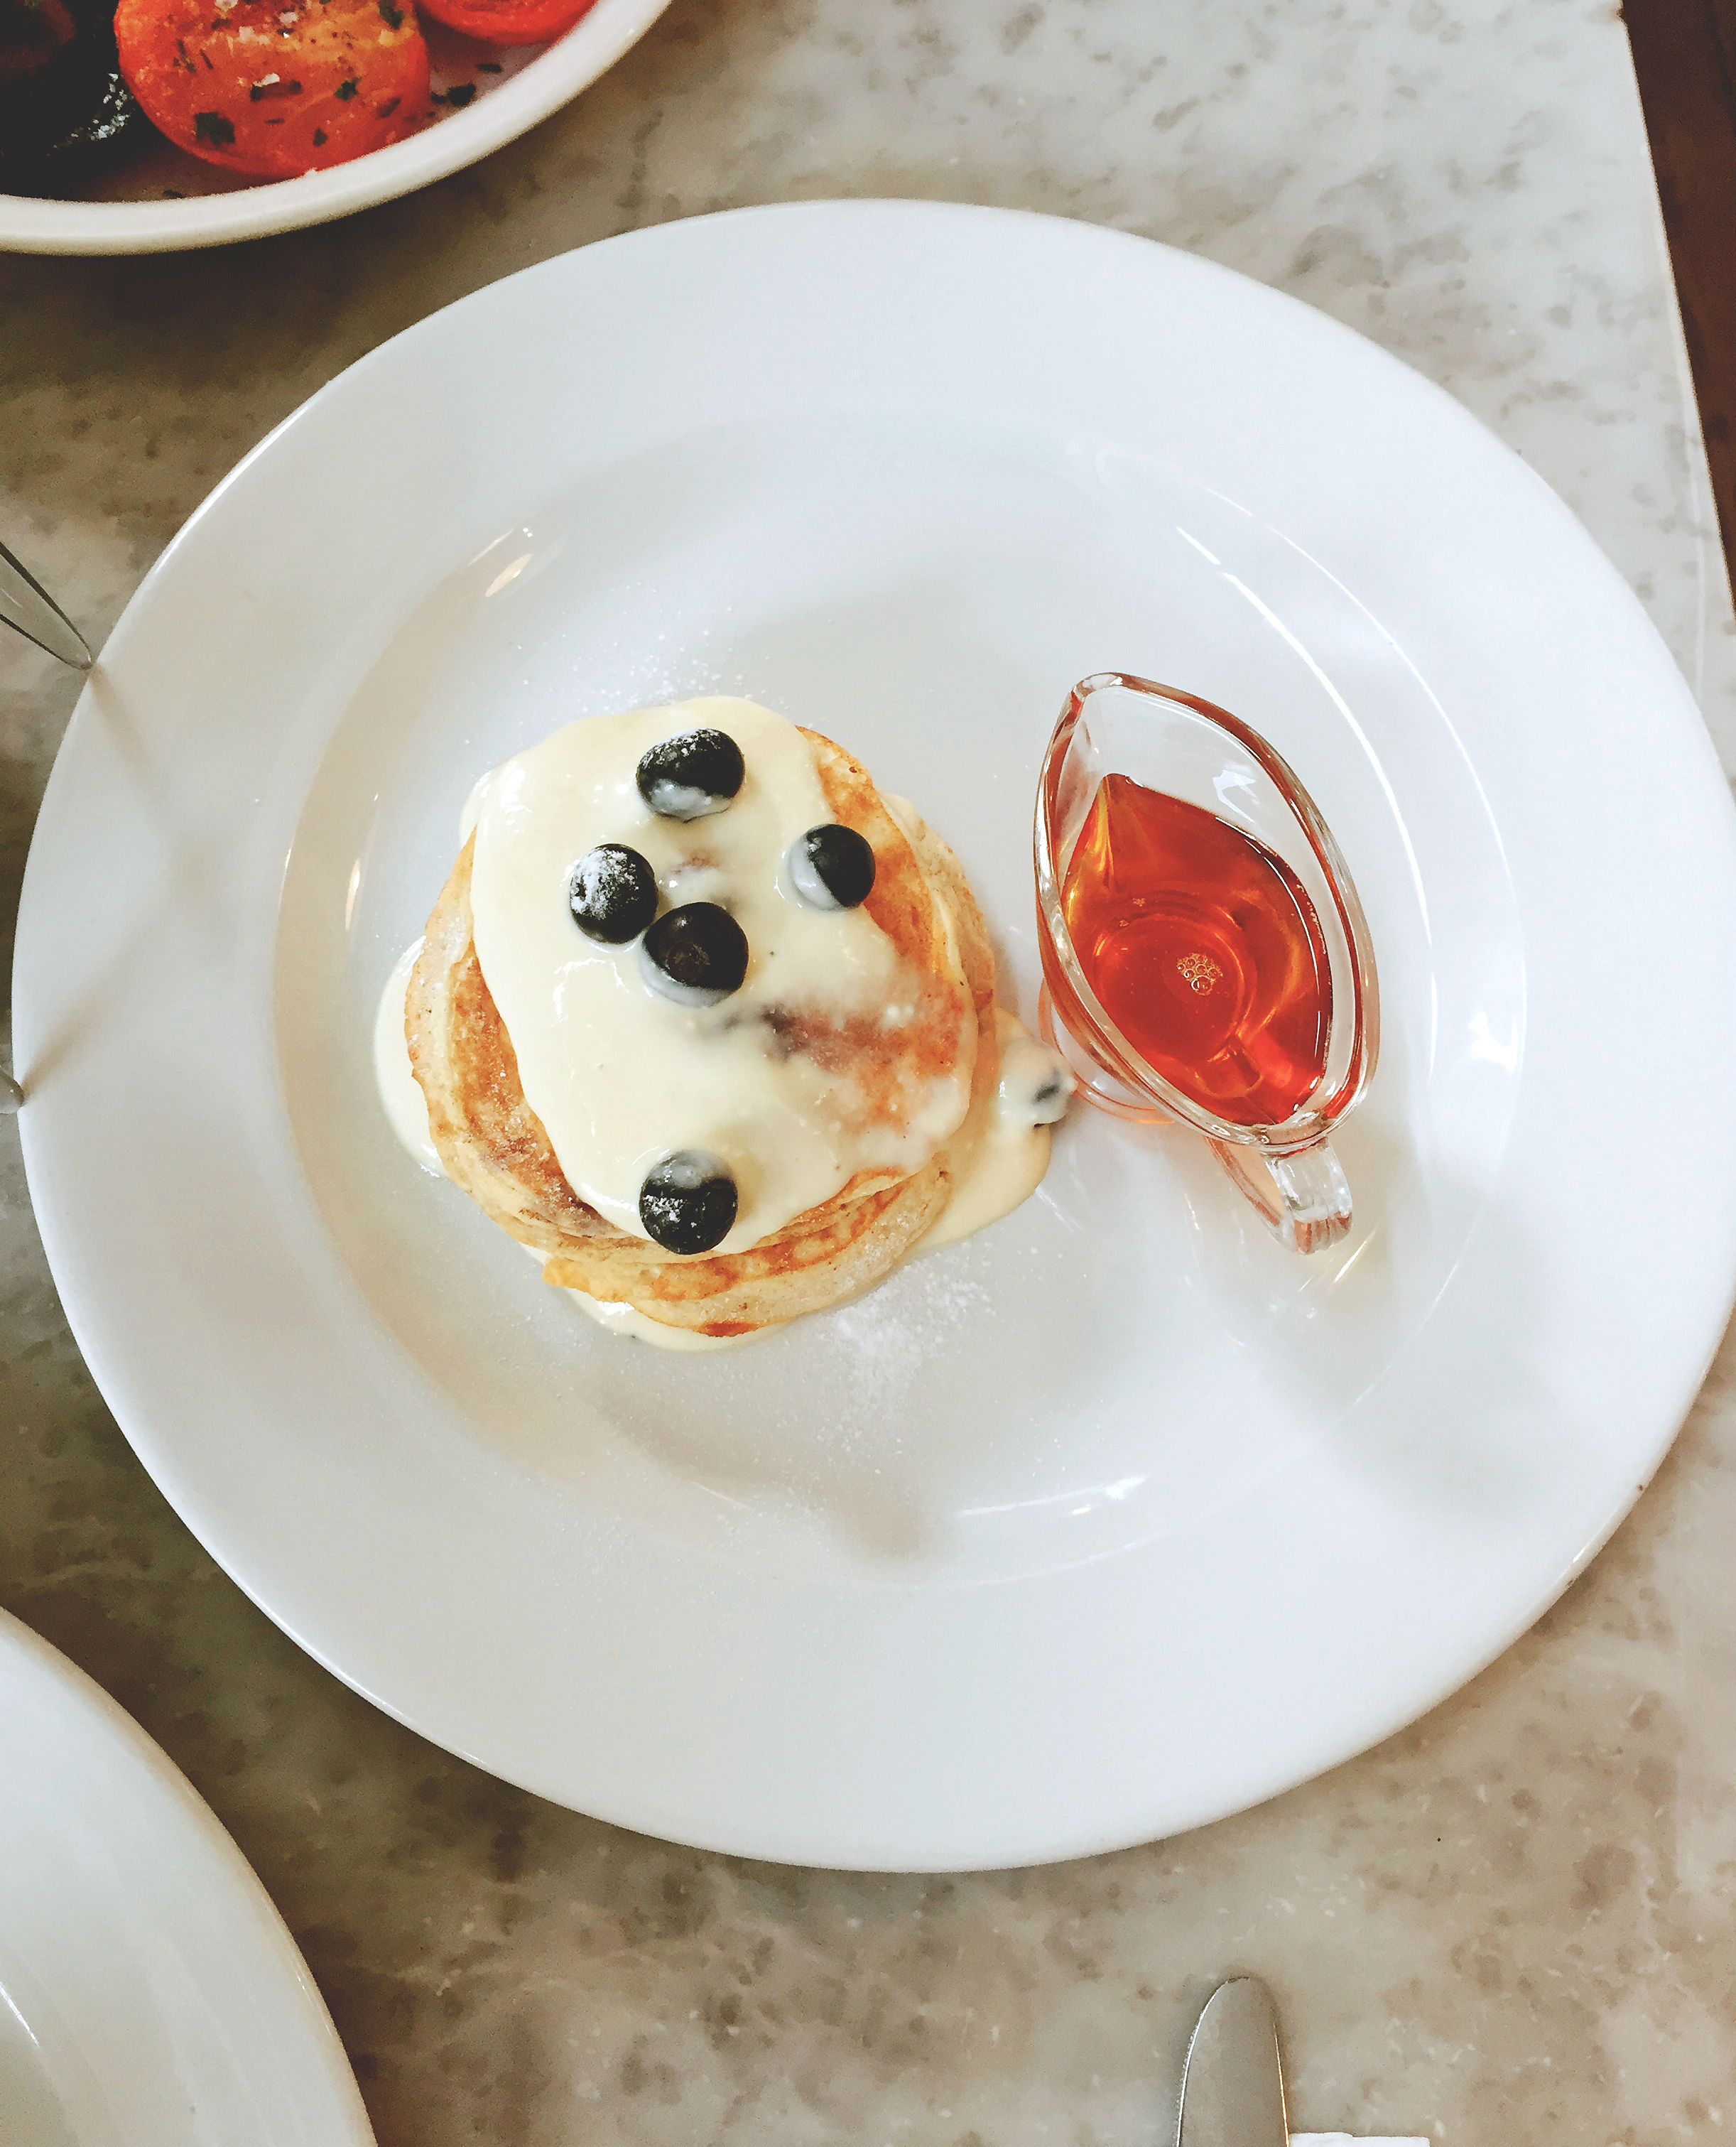 No.11 Restaurant Review - Pancakes